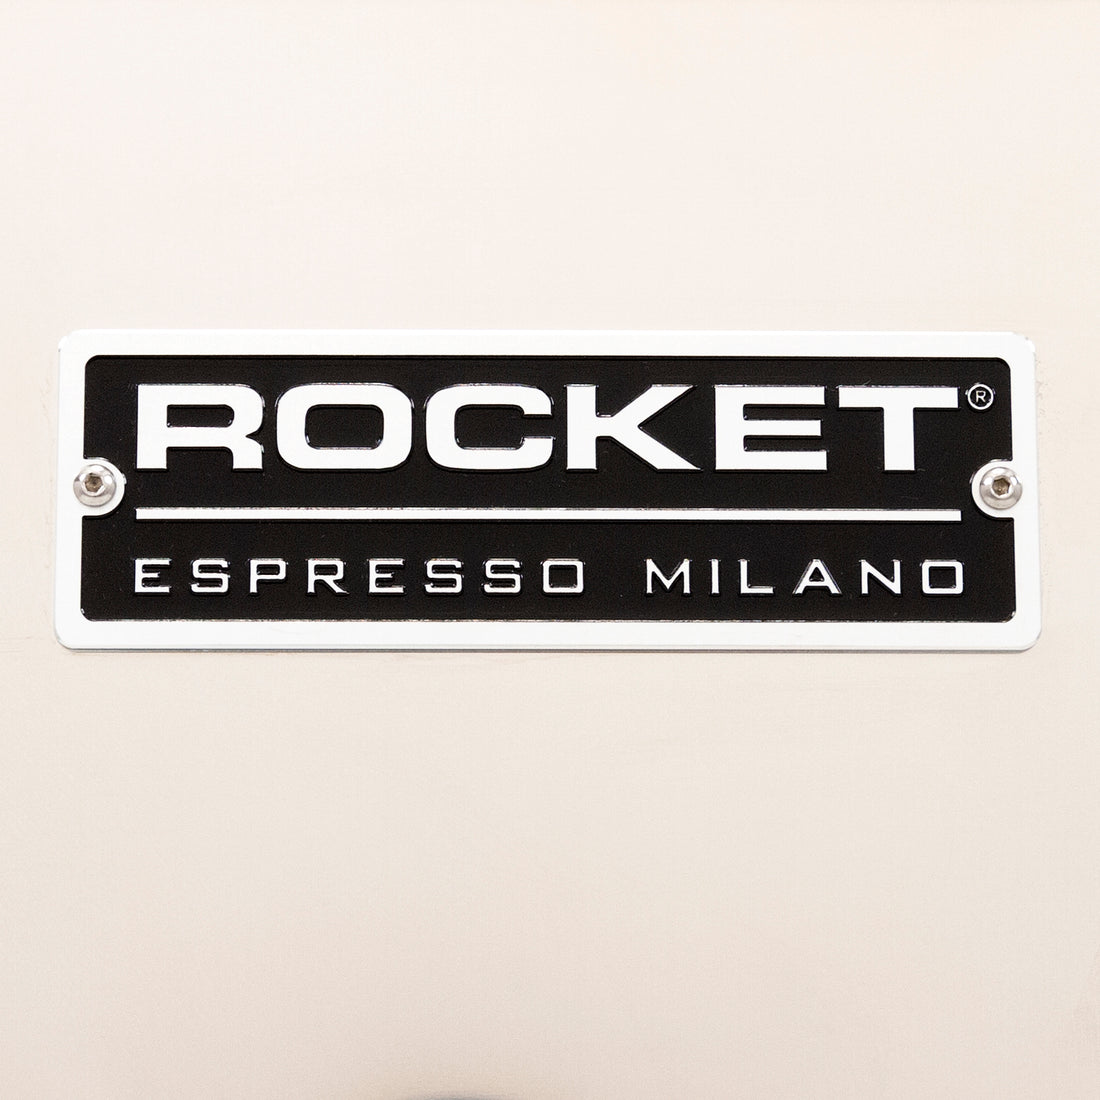 Rocket Espresso Appartamento Espresso Machine - Emerald Panels